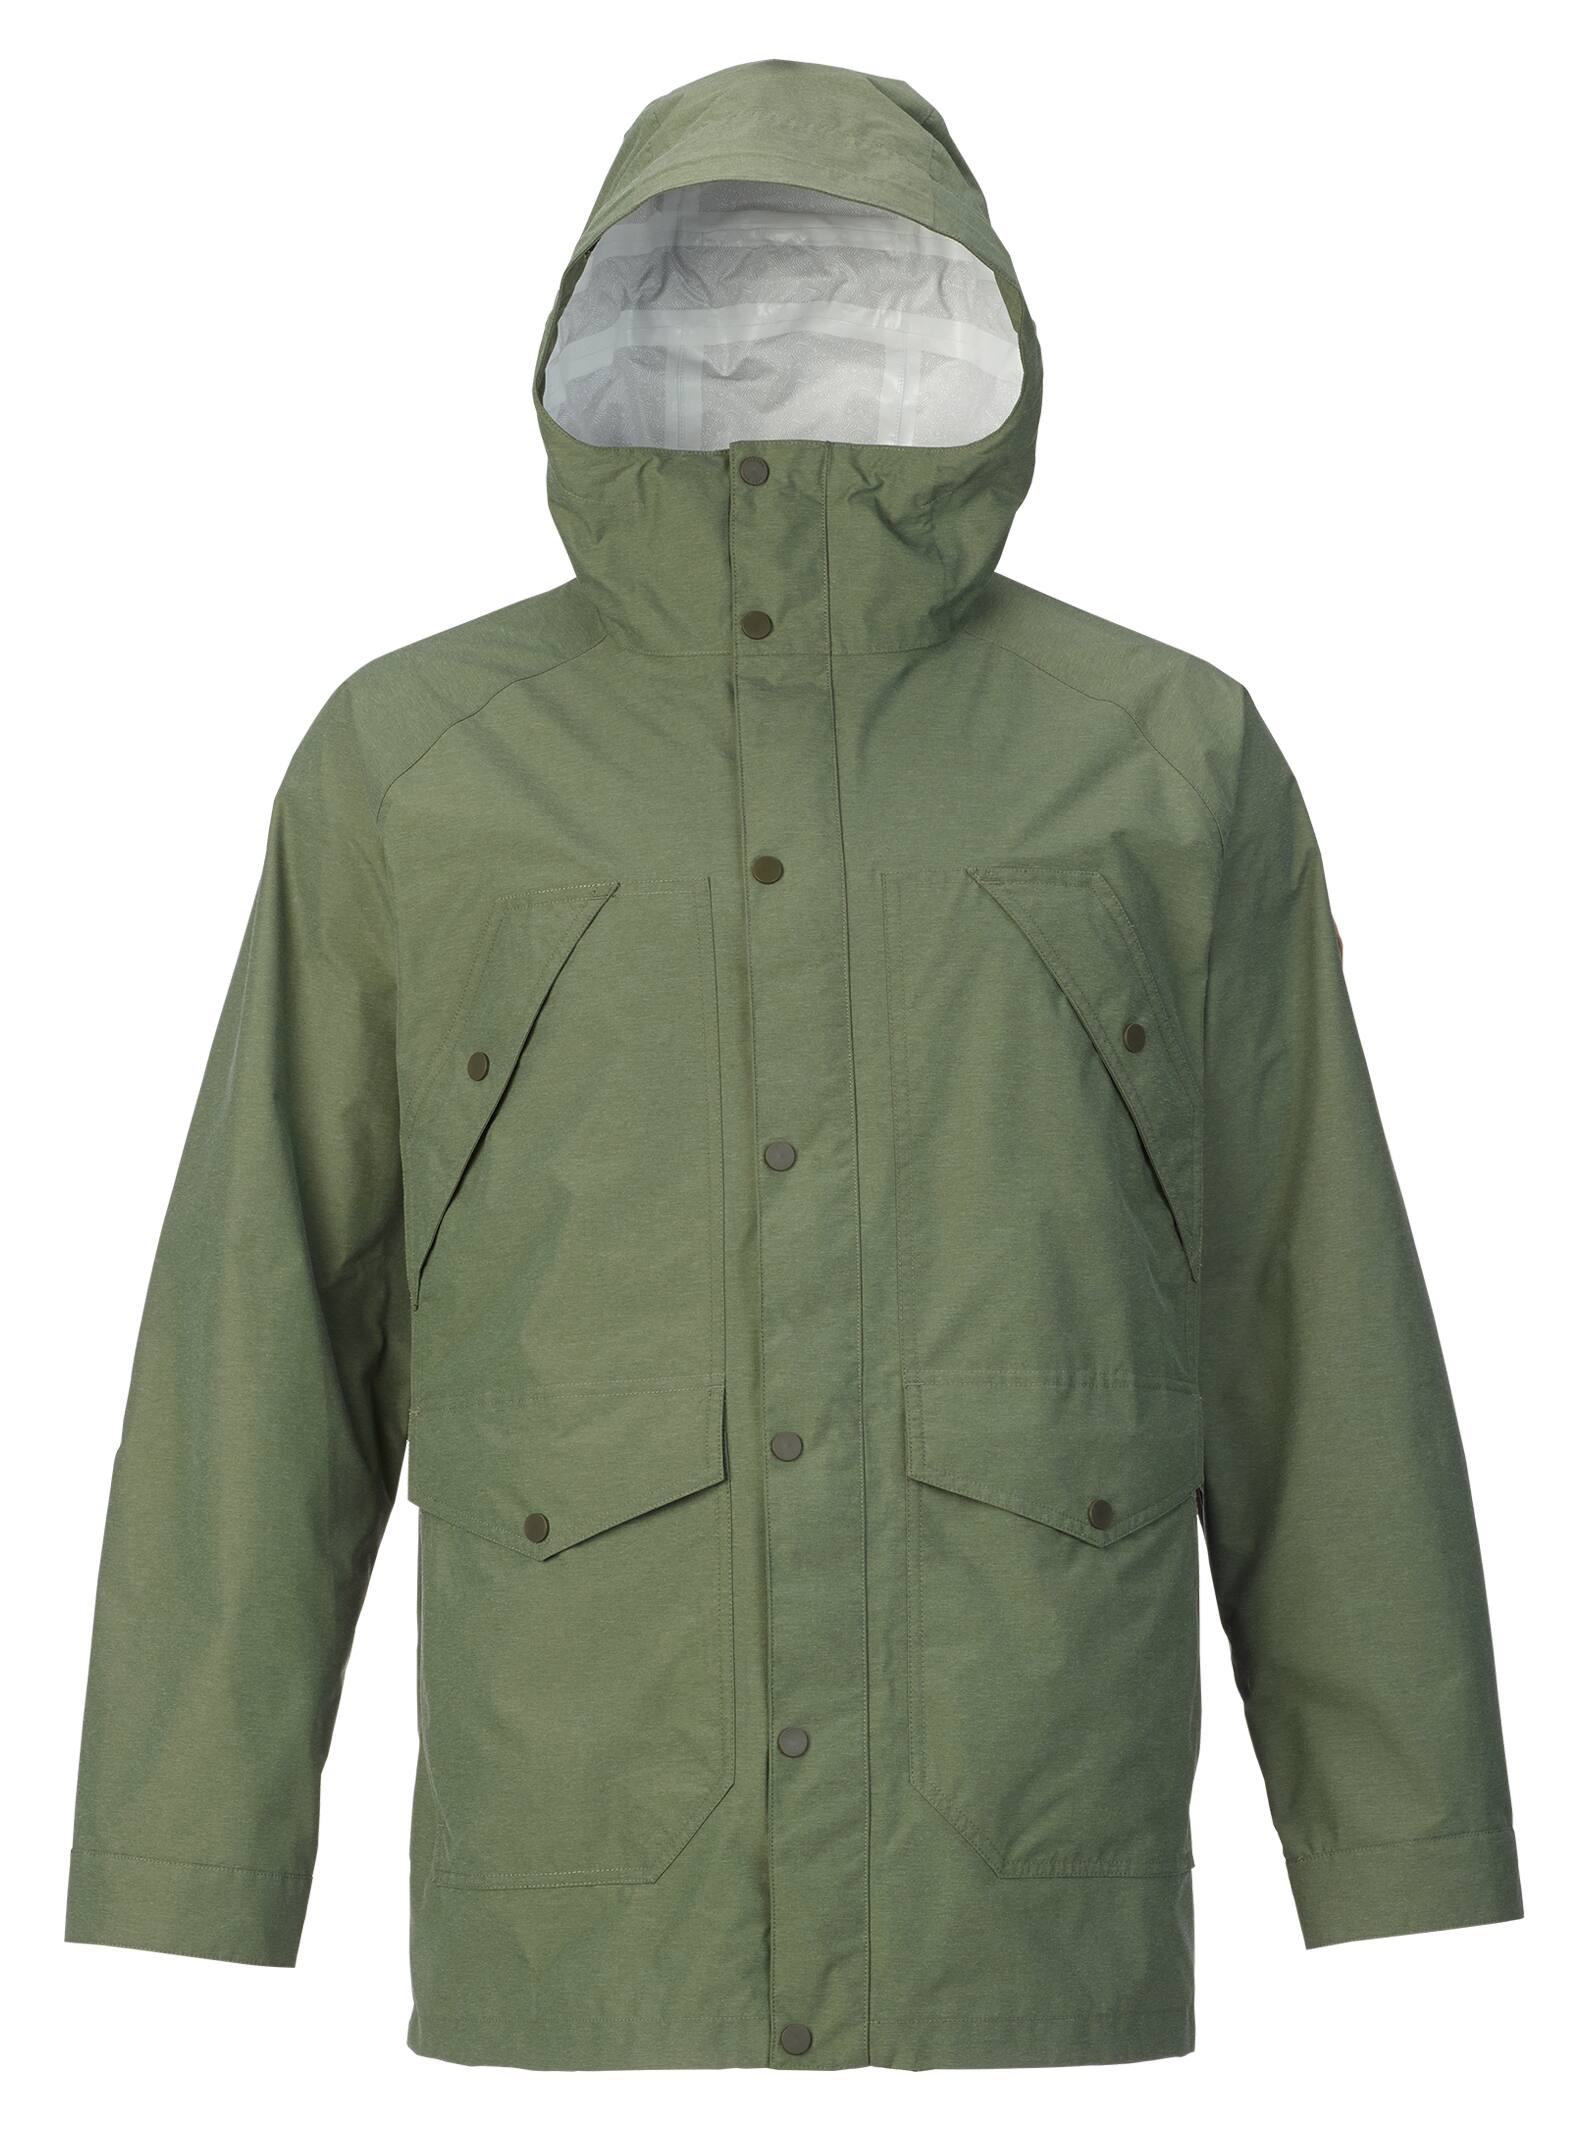 Men/'s Burton Nightcrawler Rain Jacket Size XL NWT $149 Retail NEW